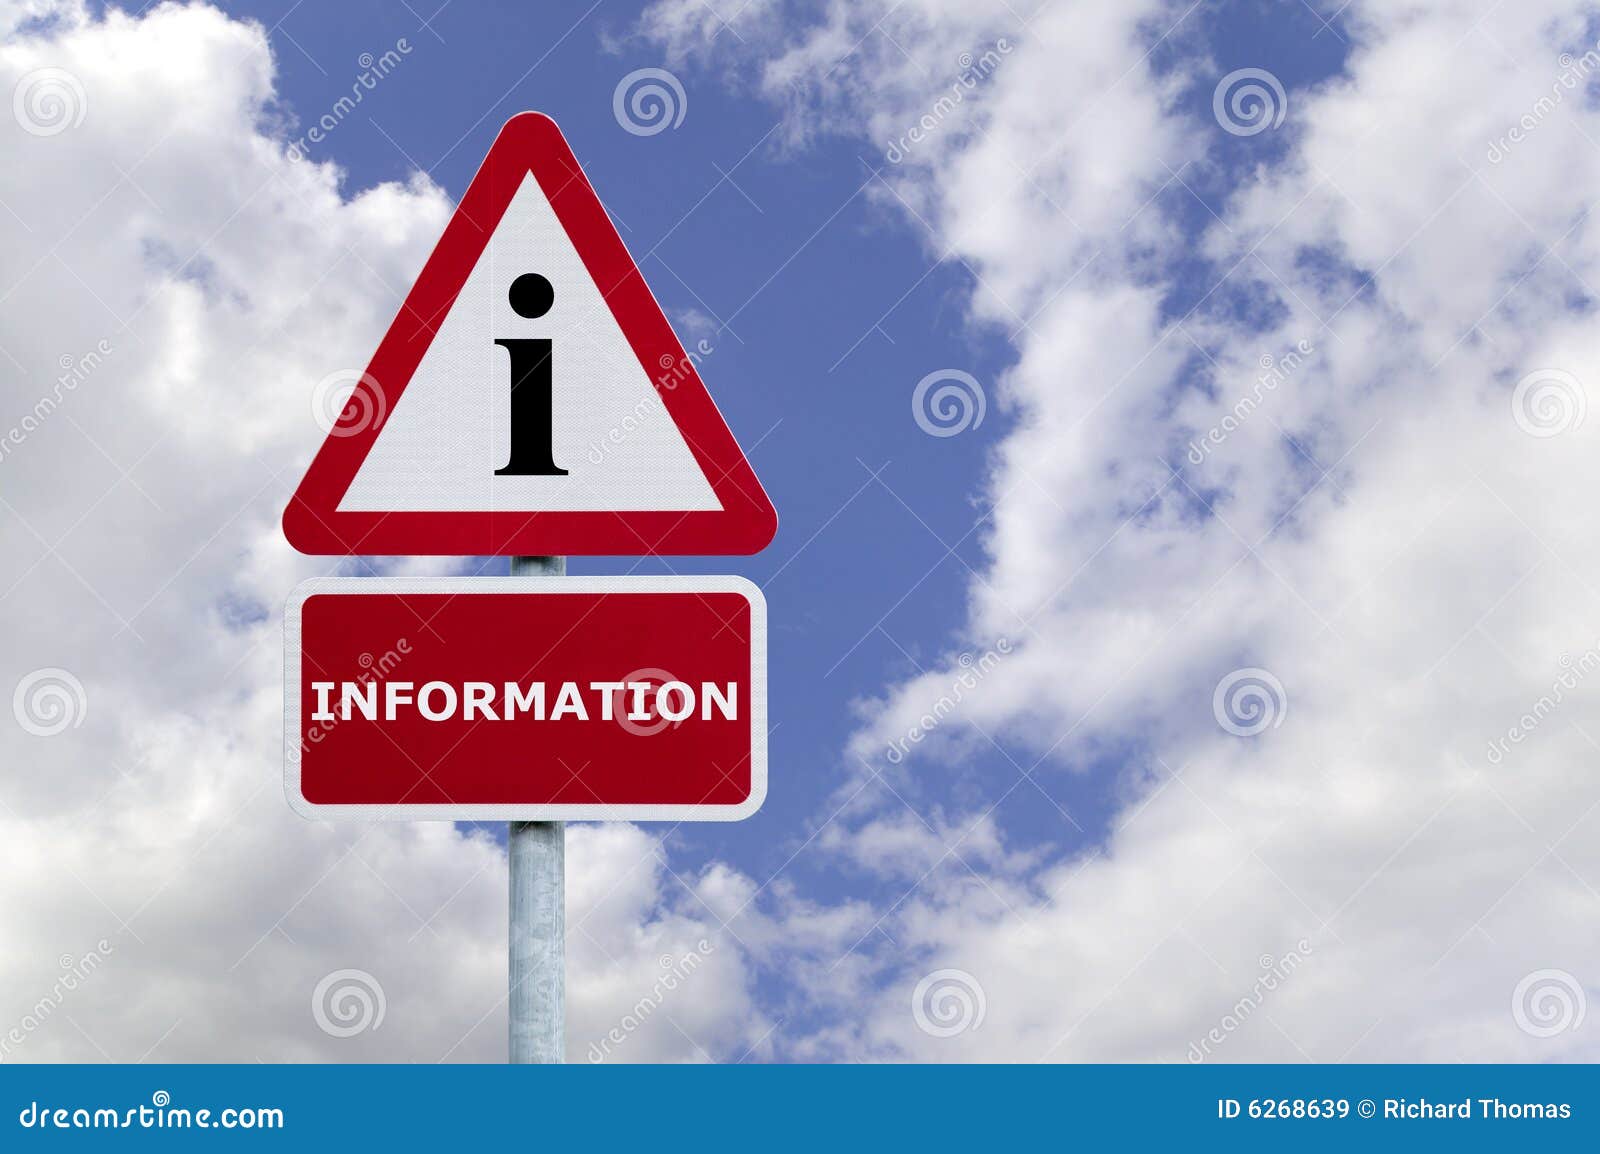 information signpost